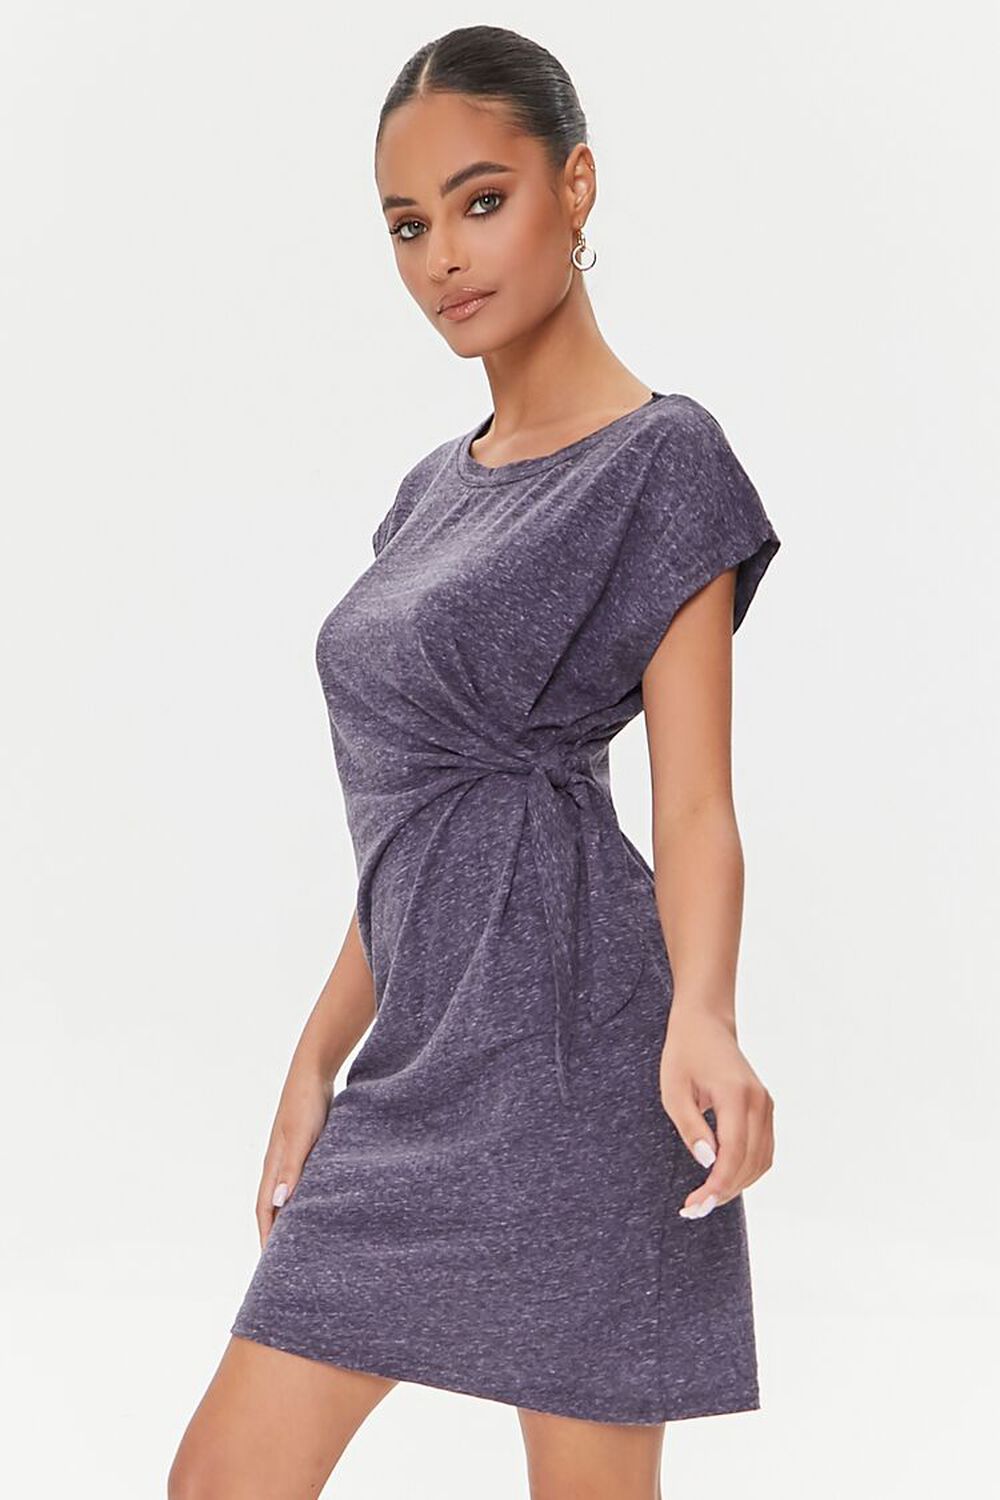 GREY Knotted Mini T-Shirt Dress, image 2